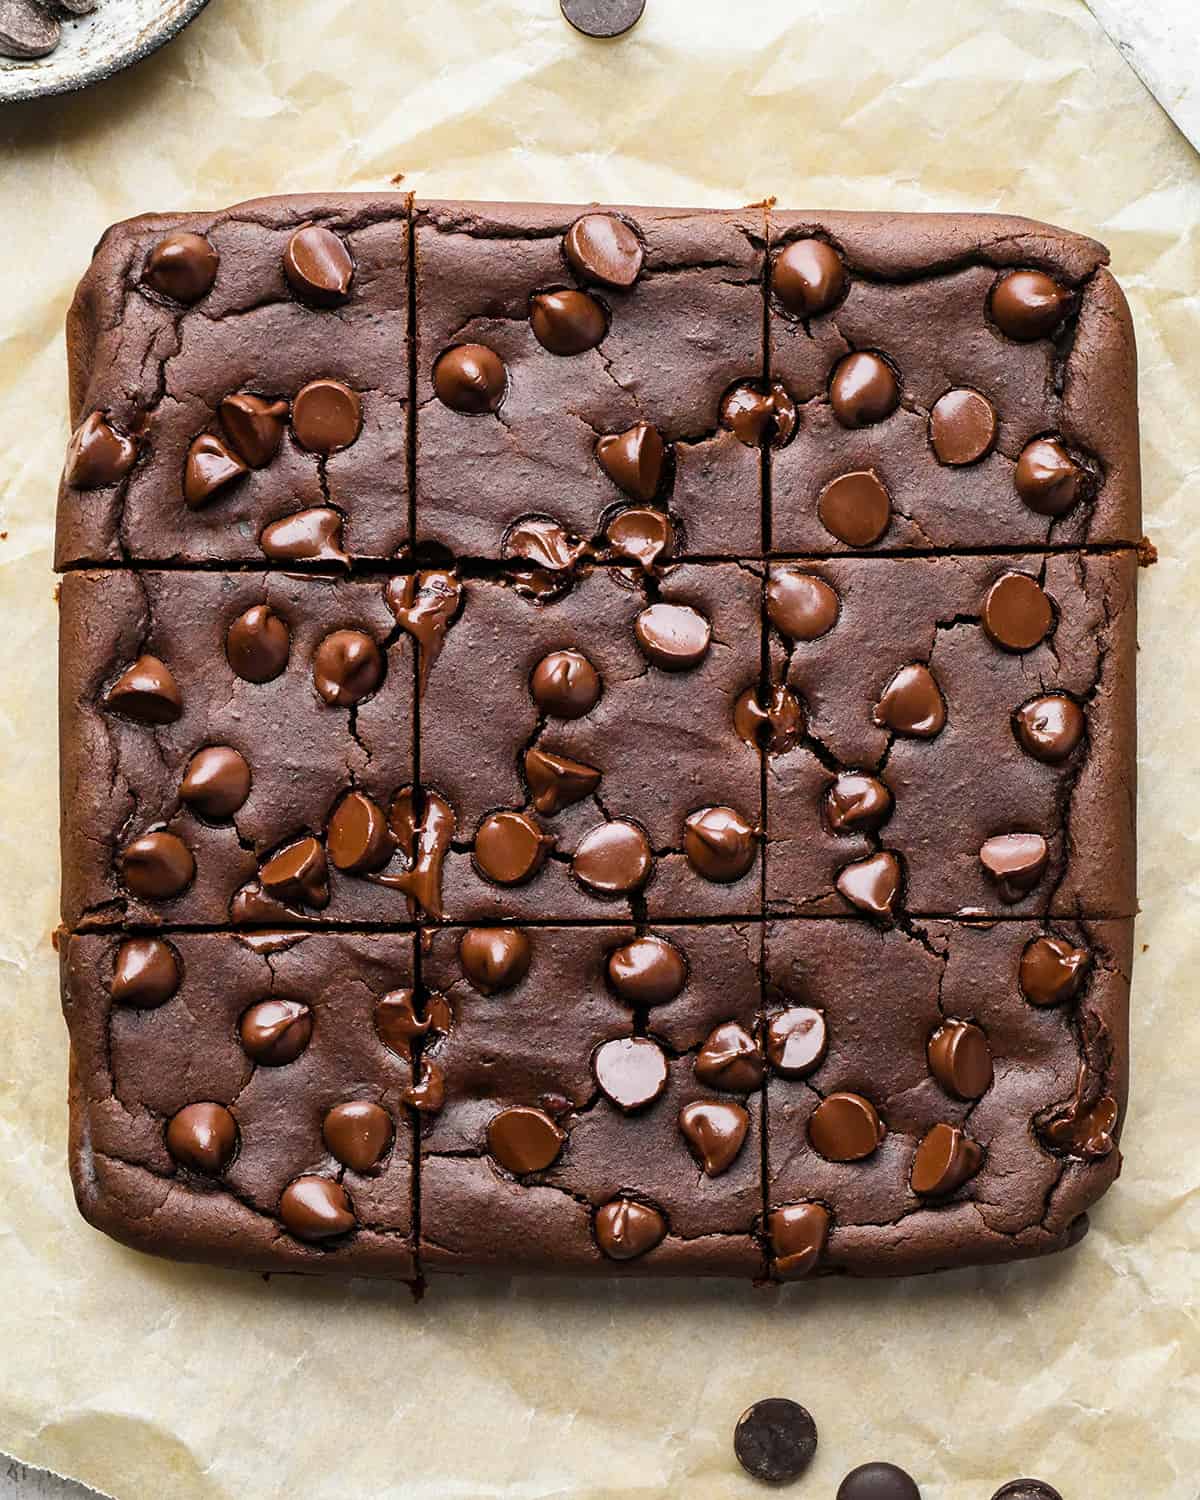 Black Bean Brownies cut into 9 squares